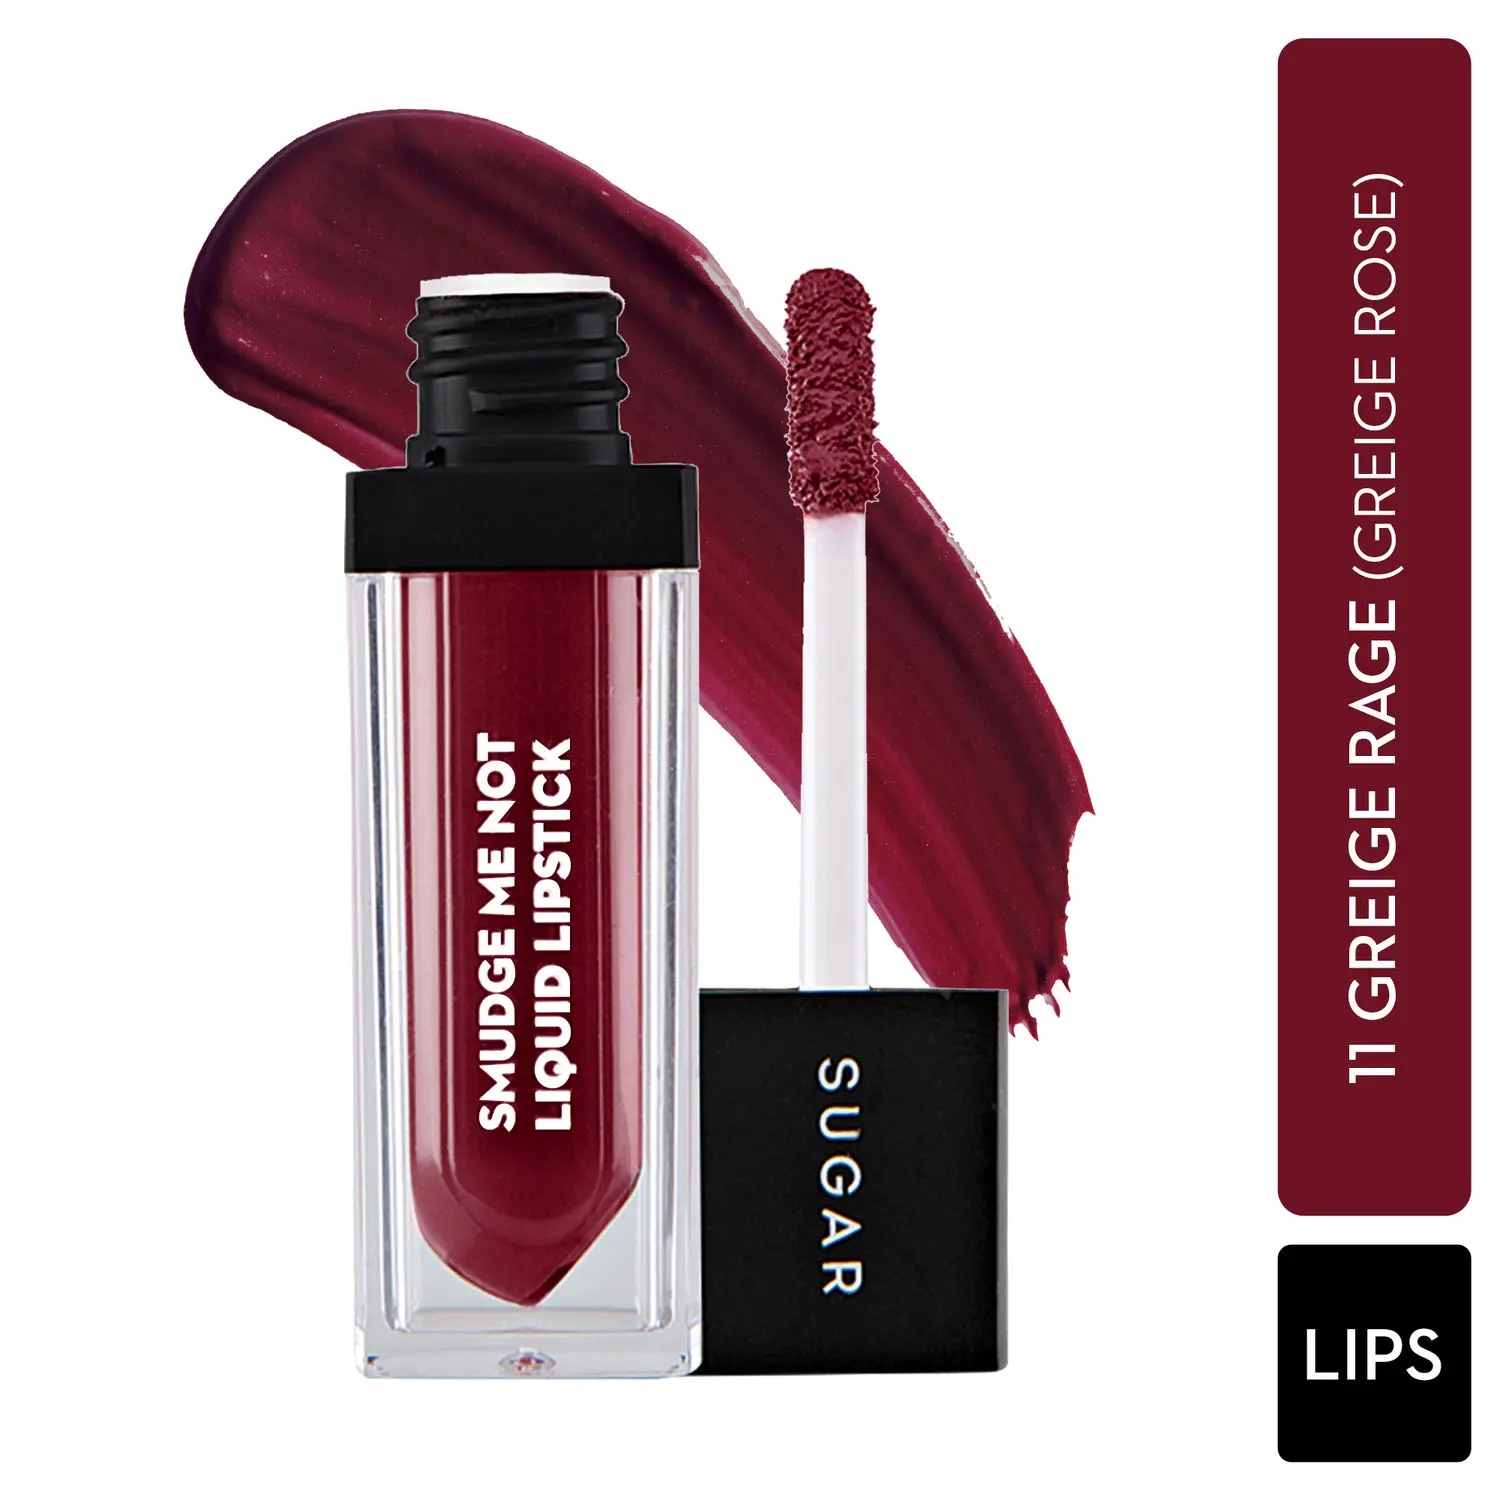 SUGAR Cosmetics - Smudge Me Not - Liquid Lipstick - 11 Greige Rage (Greige Rose) - 4.5 ml - Ultra Matte Liquid Lipstick, Transferproof and Waterproof, Lasts Up to 12 hours